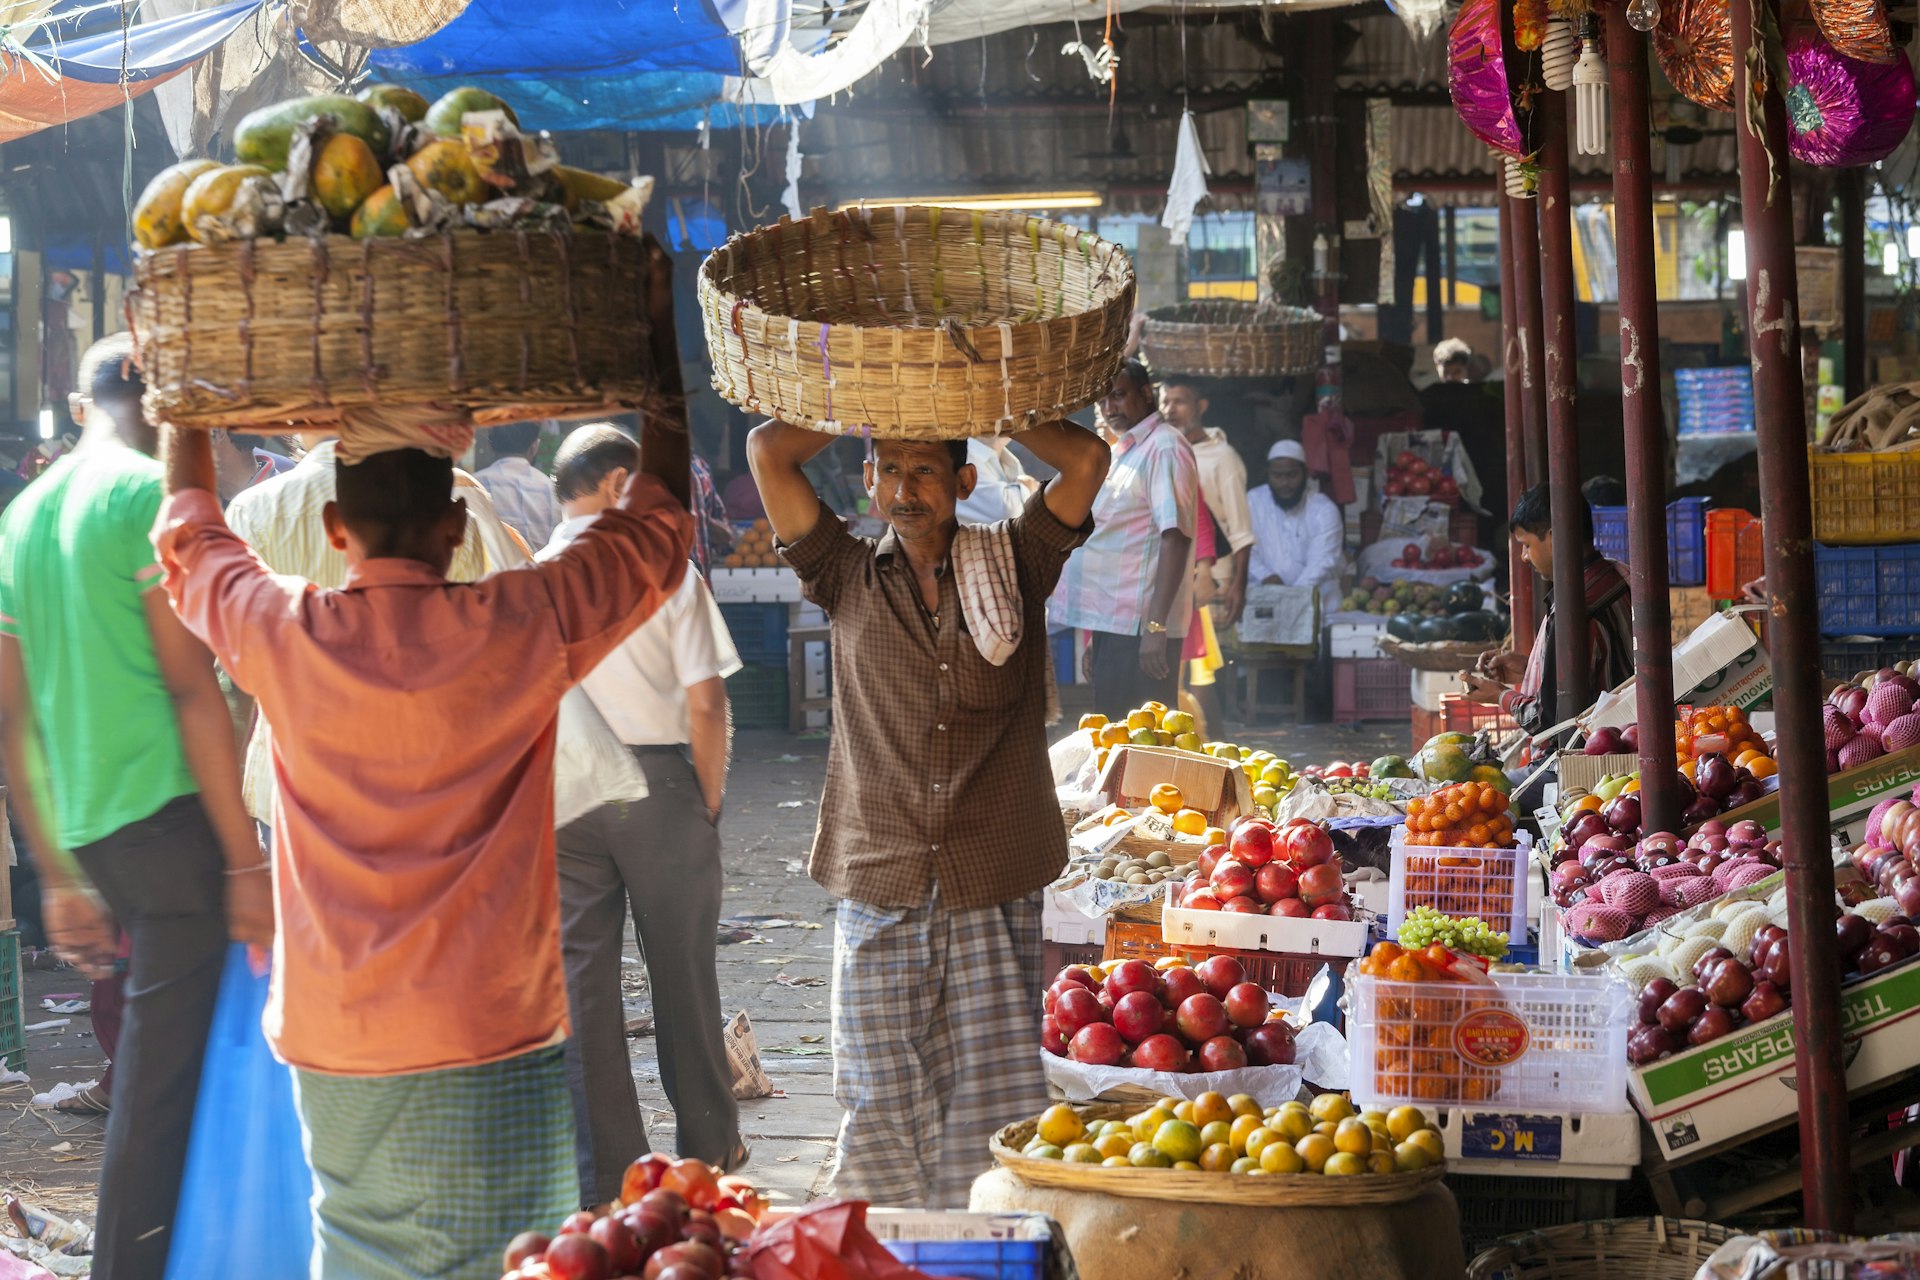 Two men carrying baskets in Crawford Market in Mumbai, India